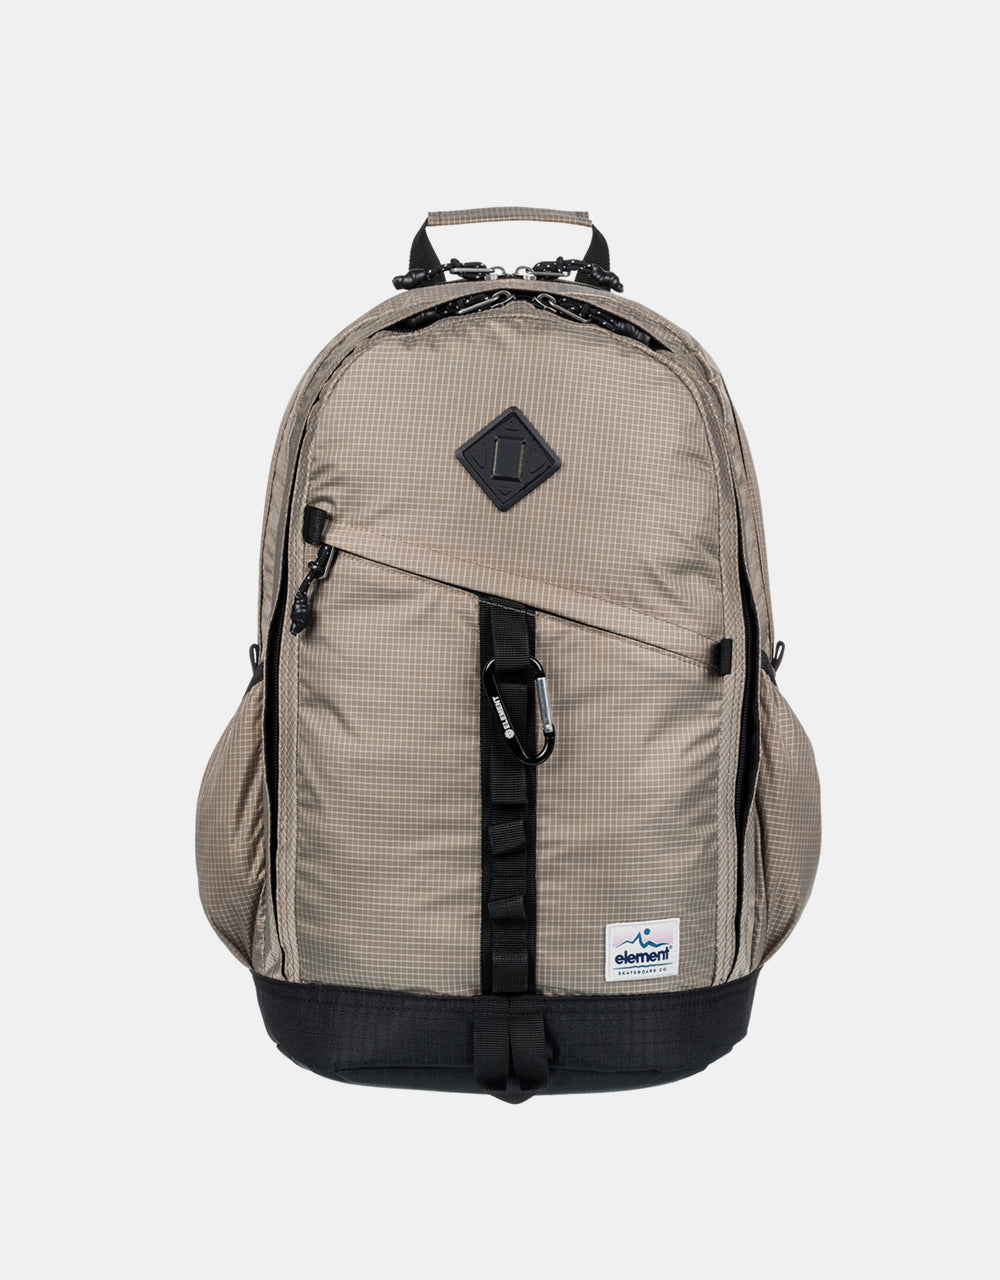 ELEMENT | Bags & backpacks